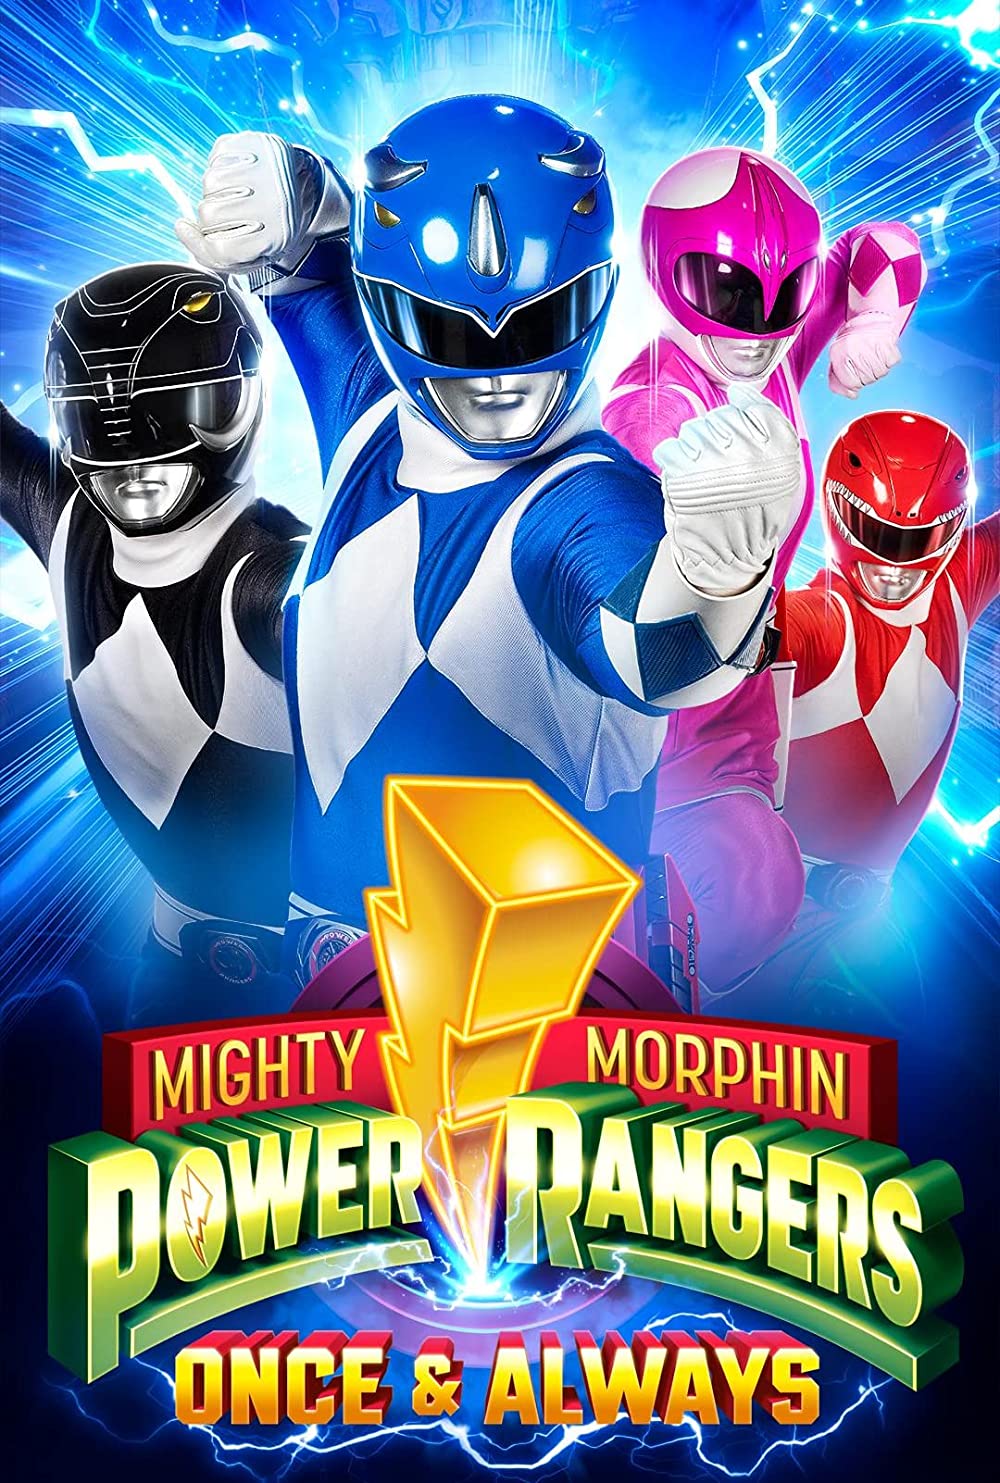 Poster Phim Power Rangers: Một Lần và Mãi Mãi (Mighty Morphin Power Rangers Once and Always)